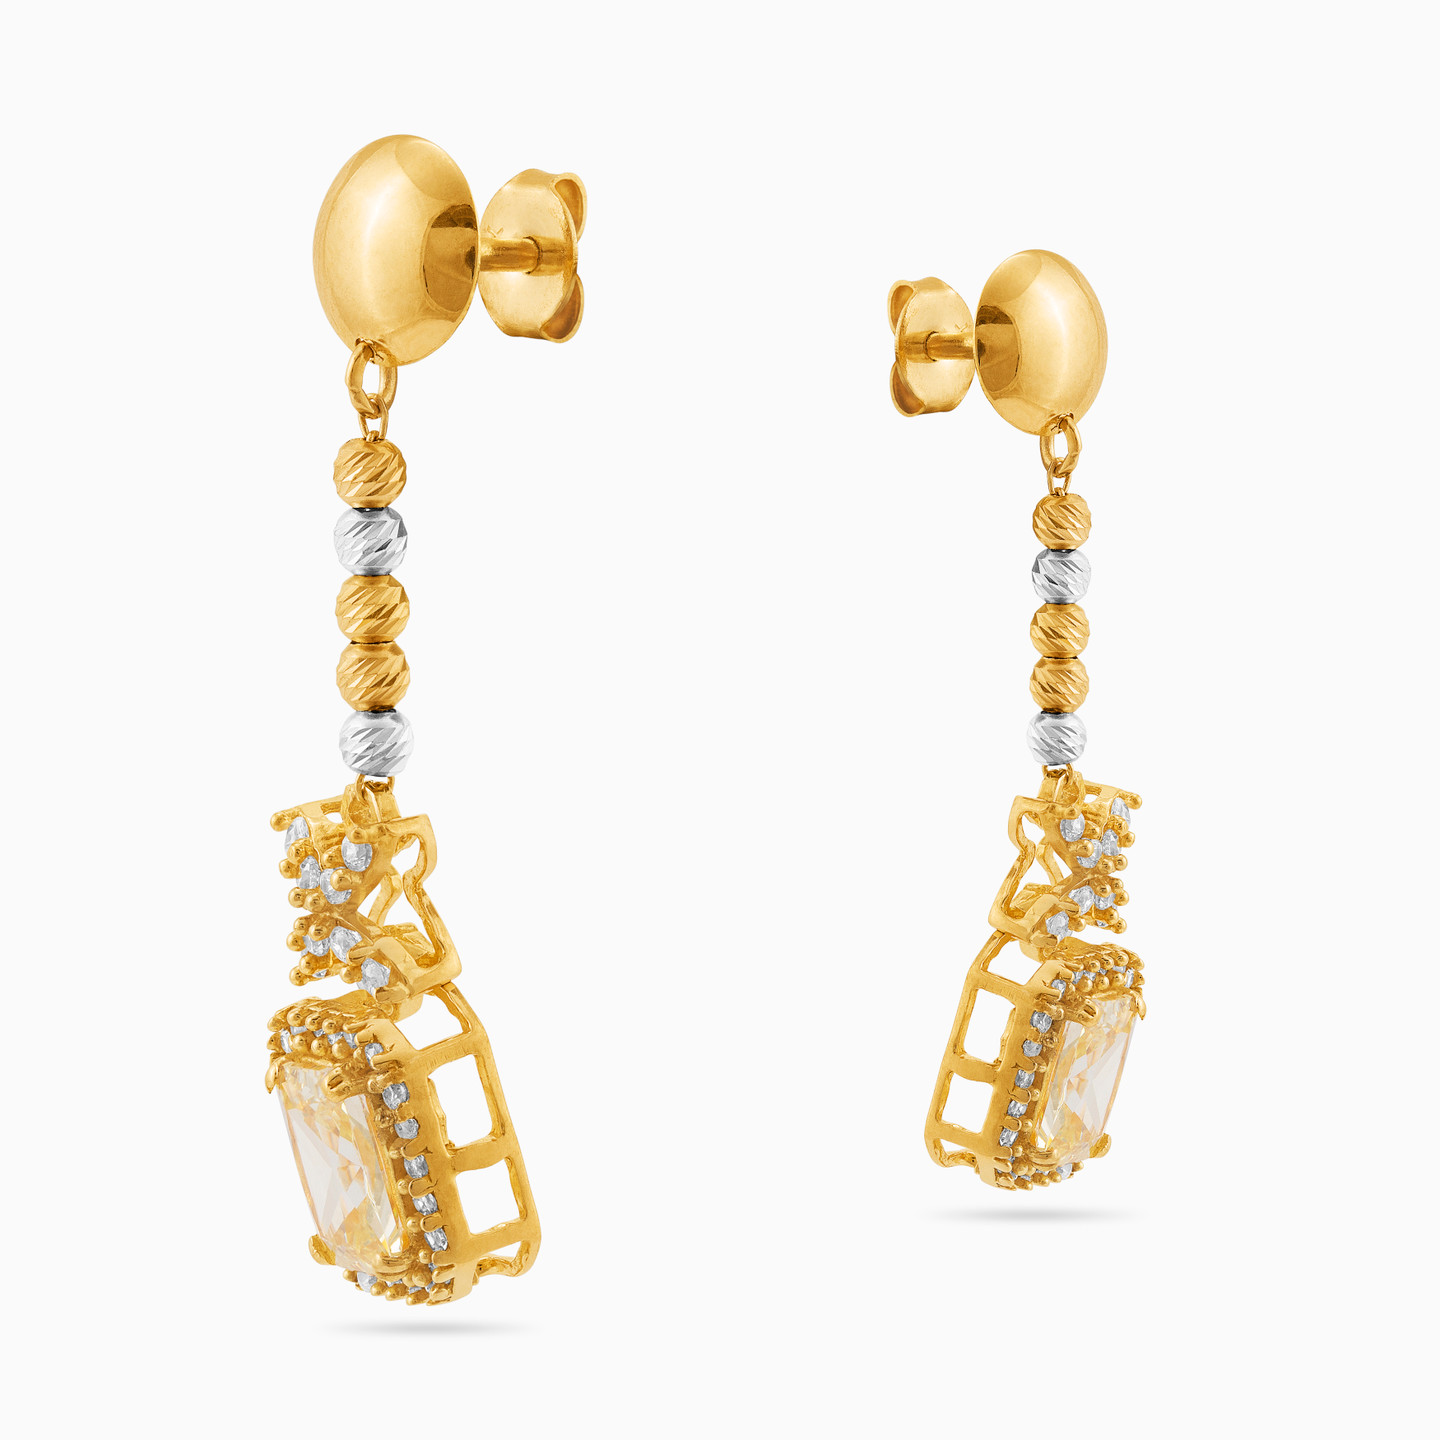 21K Gold Colored Stones Drop Earrings - 3